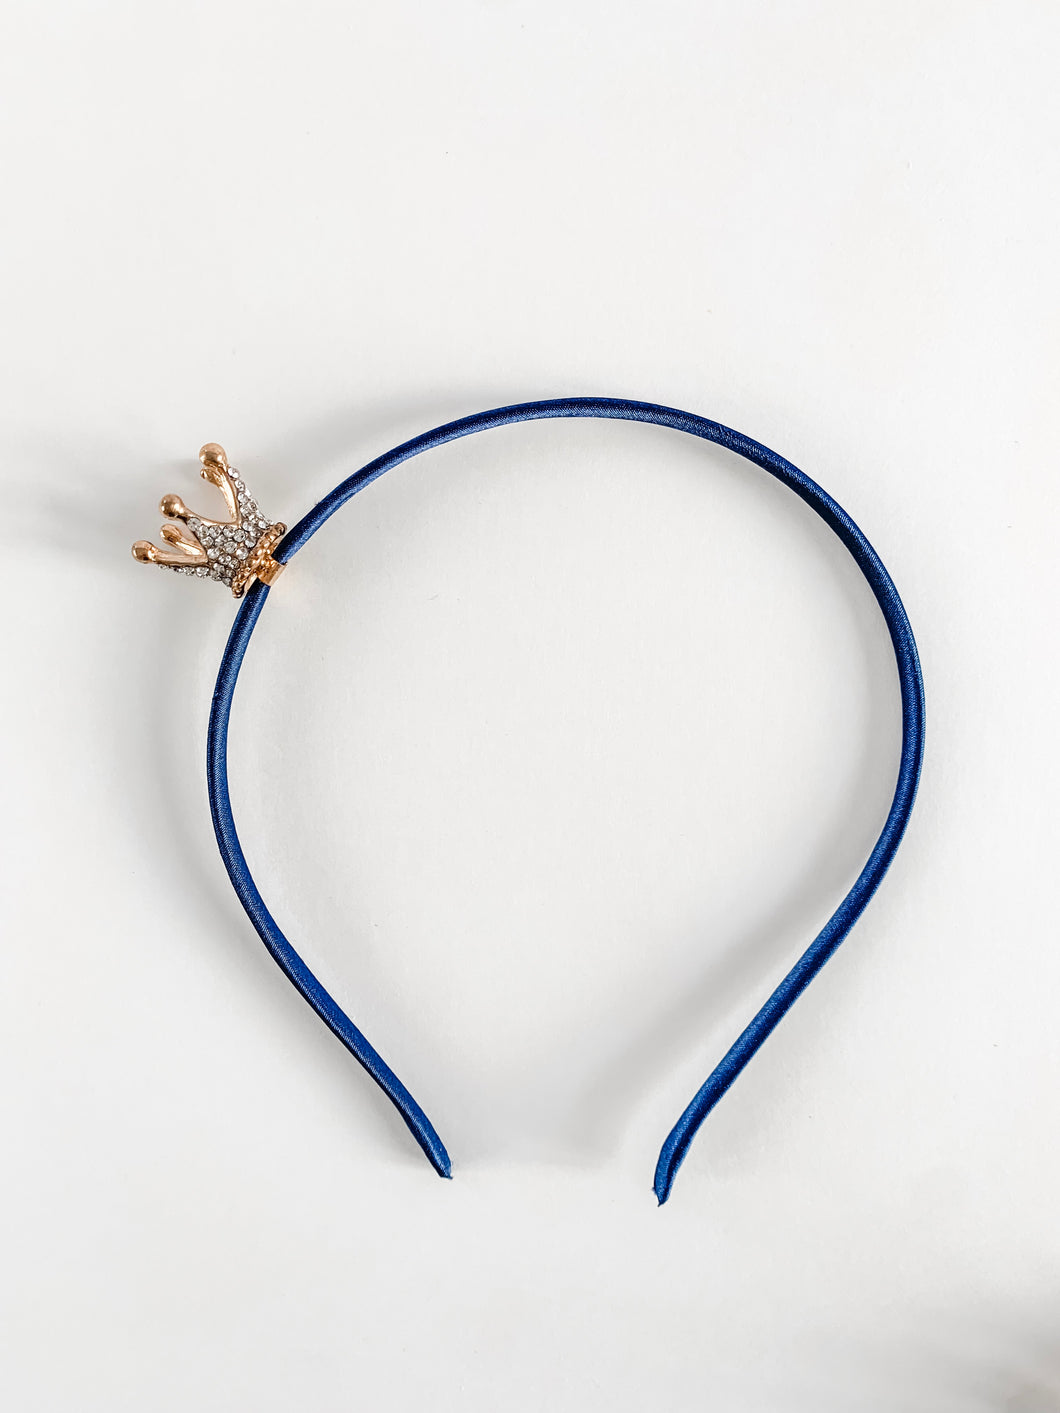 Headband with Rhinestone Tiara - Navy Blue - HB003